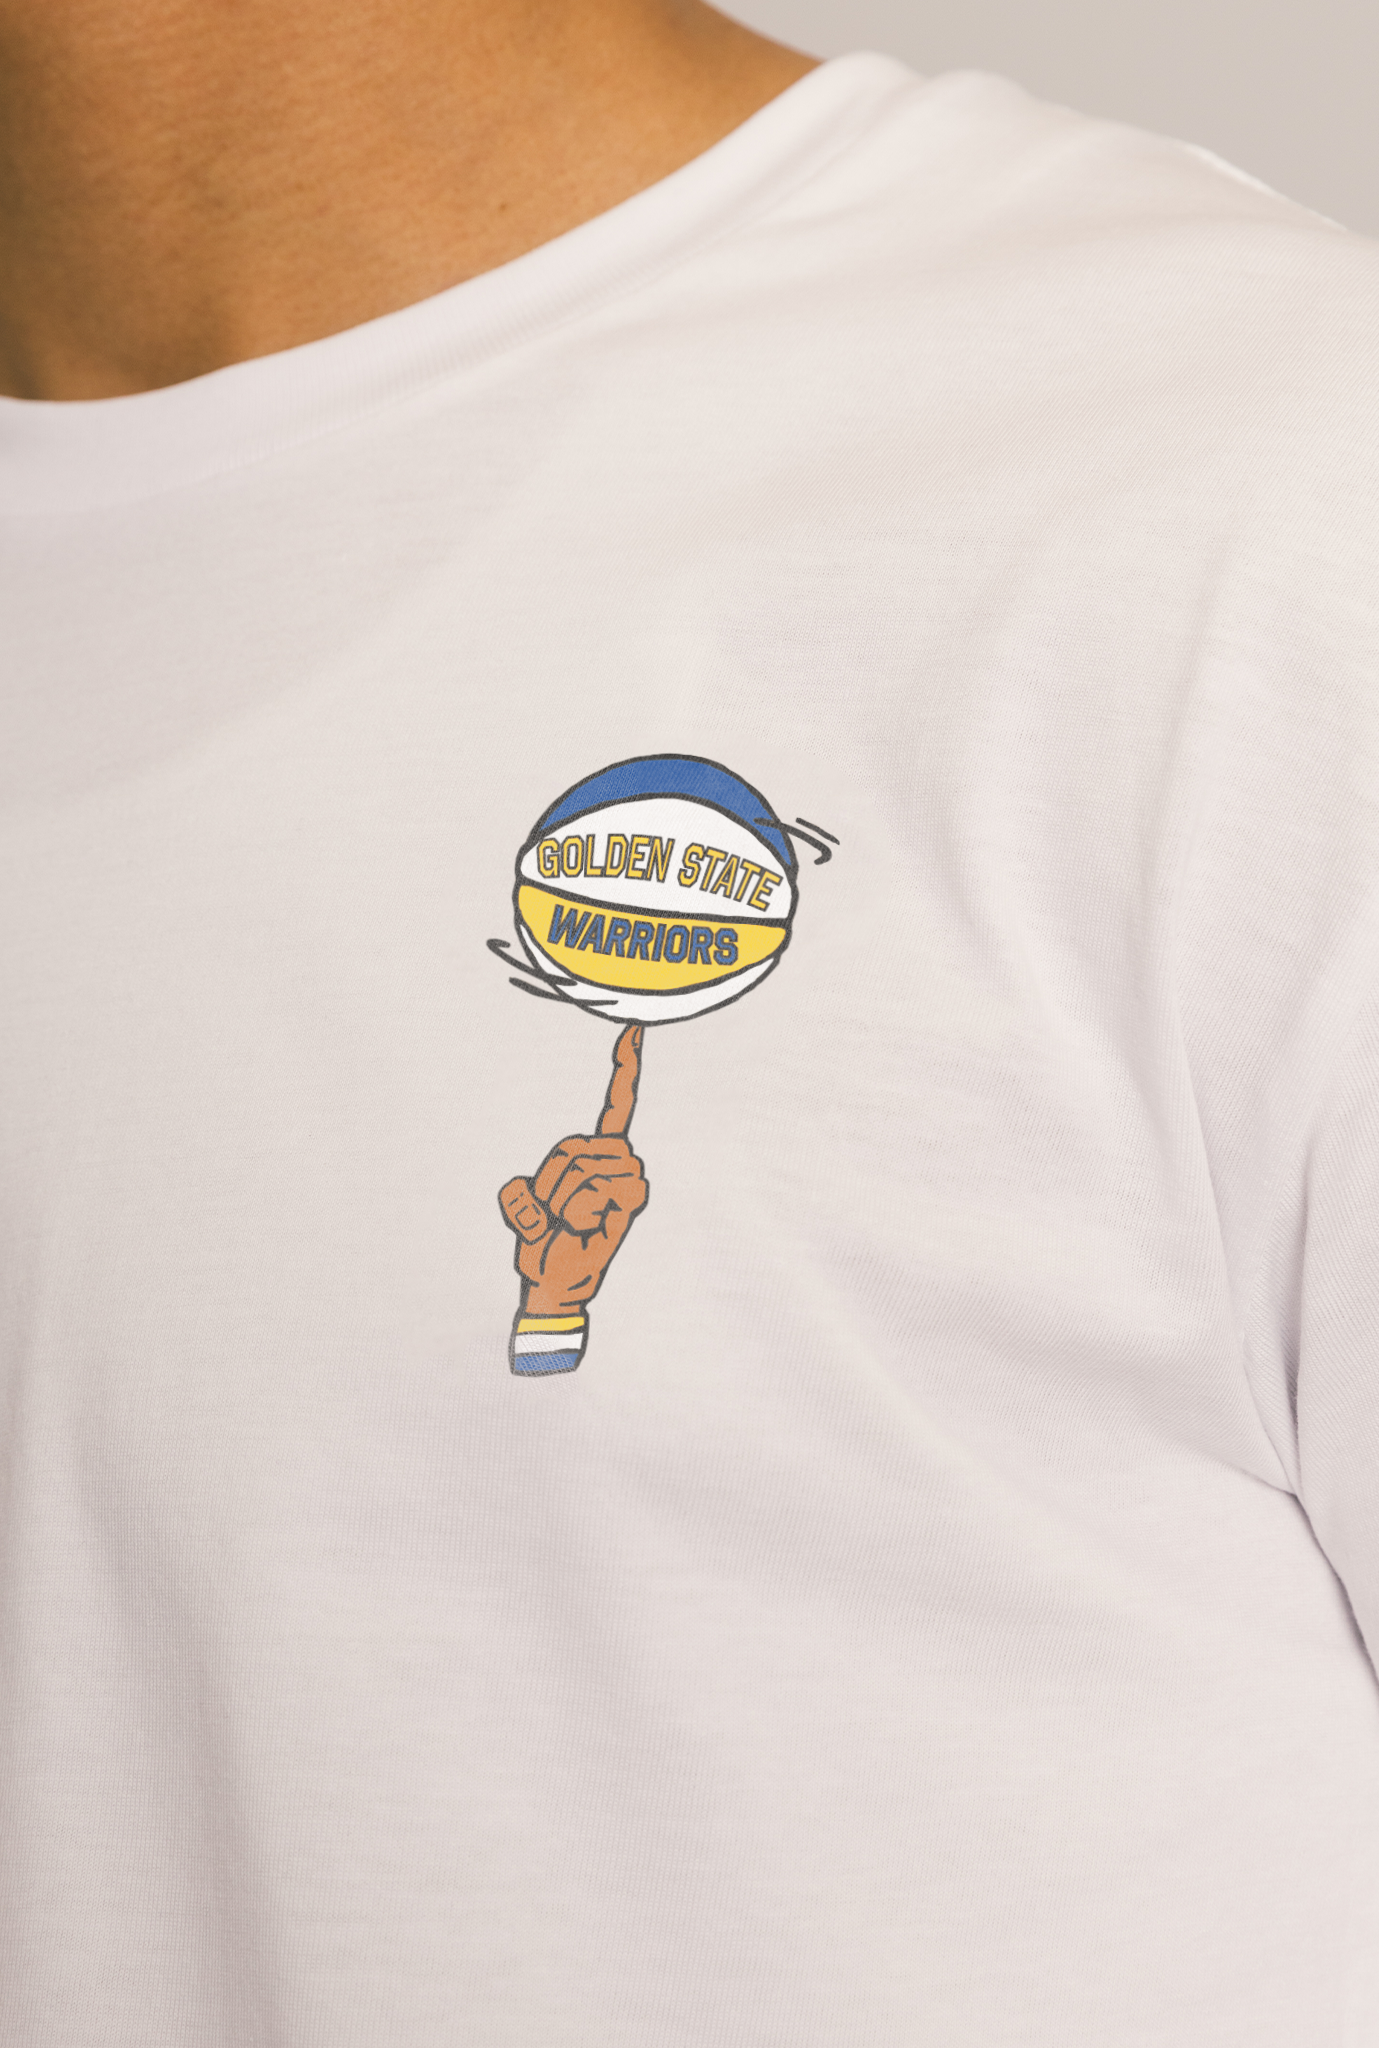 Golden State Warriors Spinning Ball T-Shirt - White